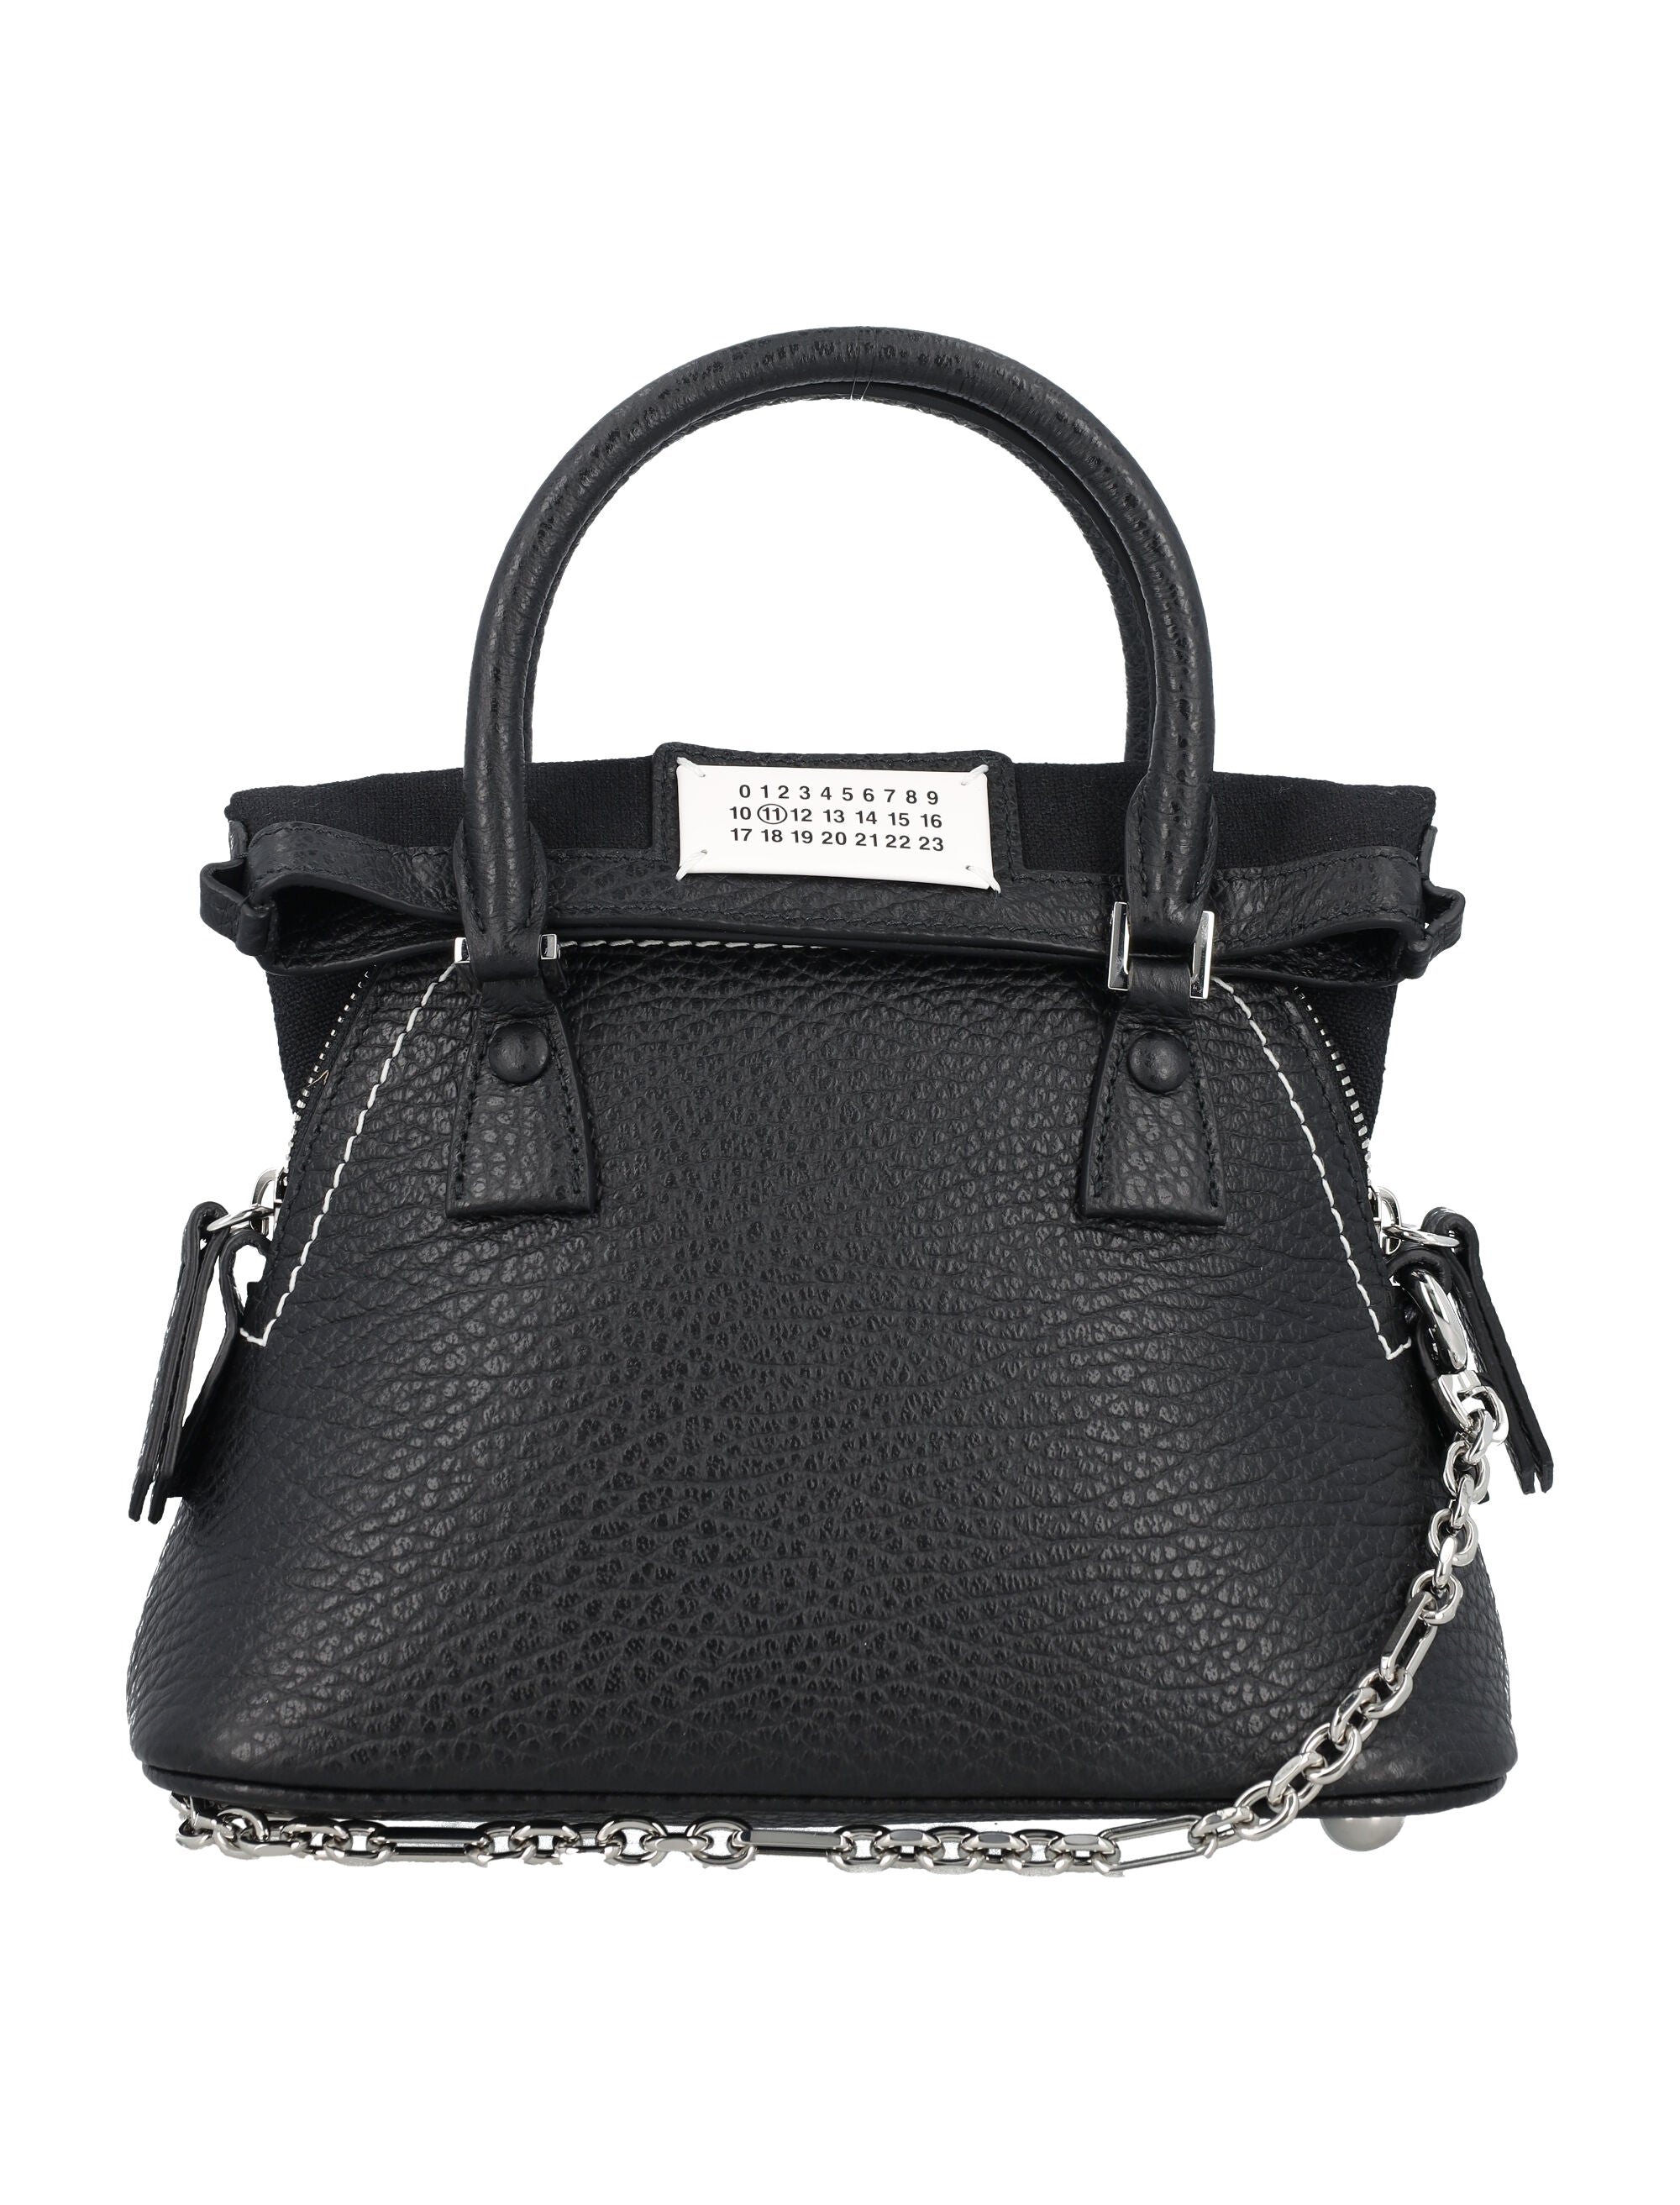 Maison Margiela Black Leather Micro 5ac Handbag